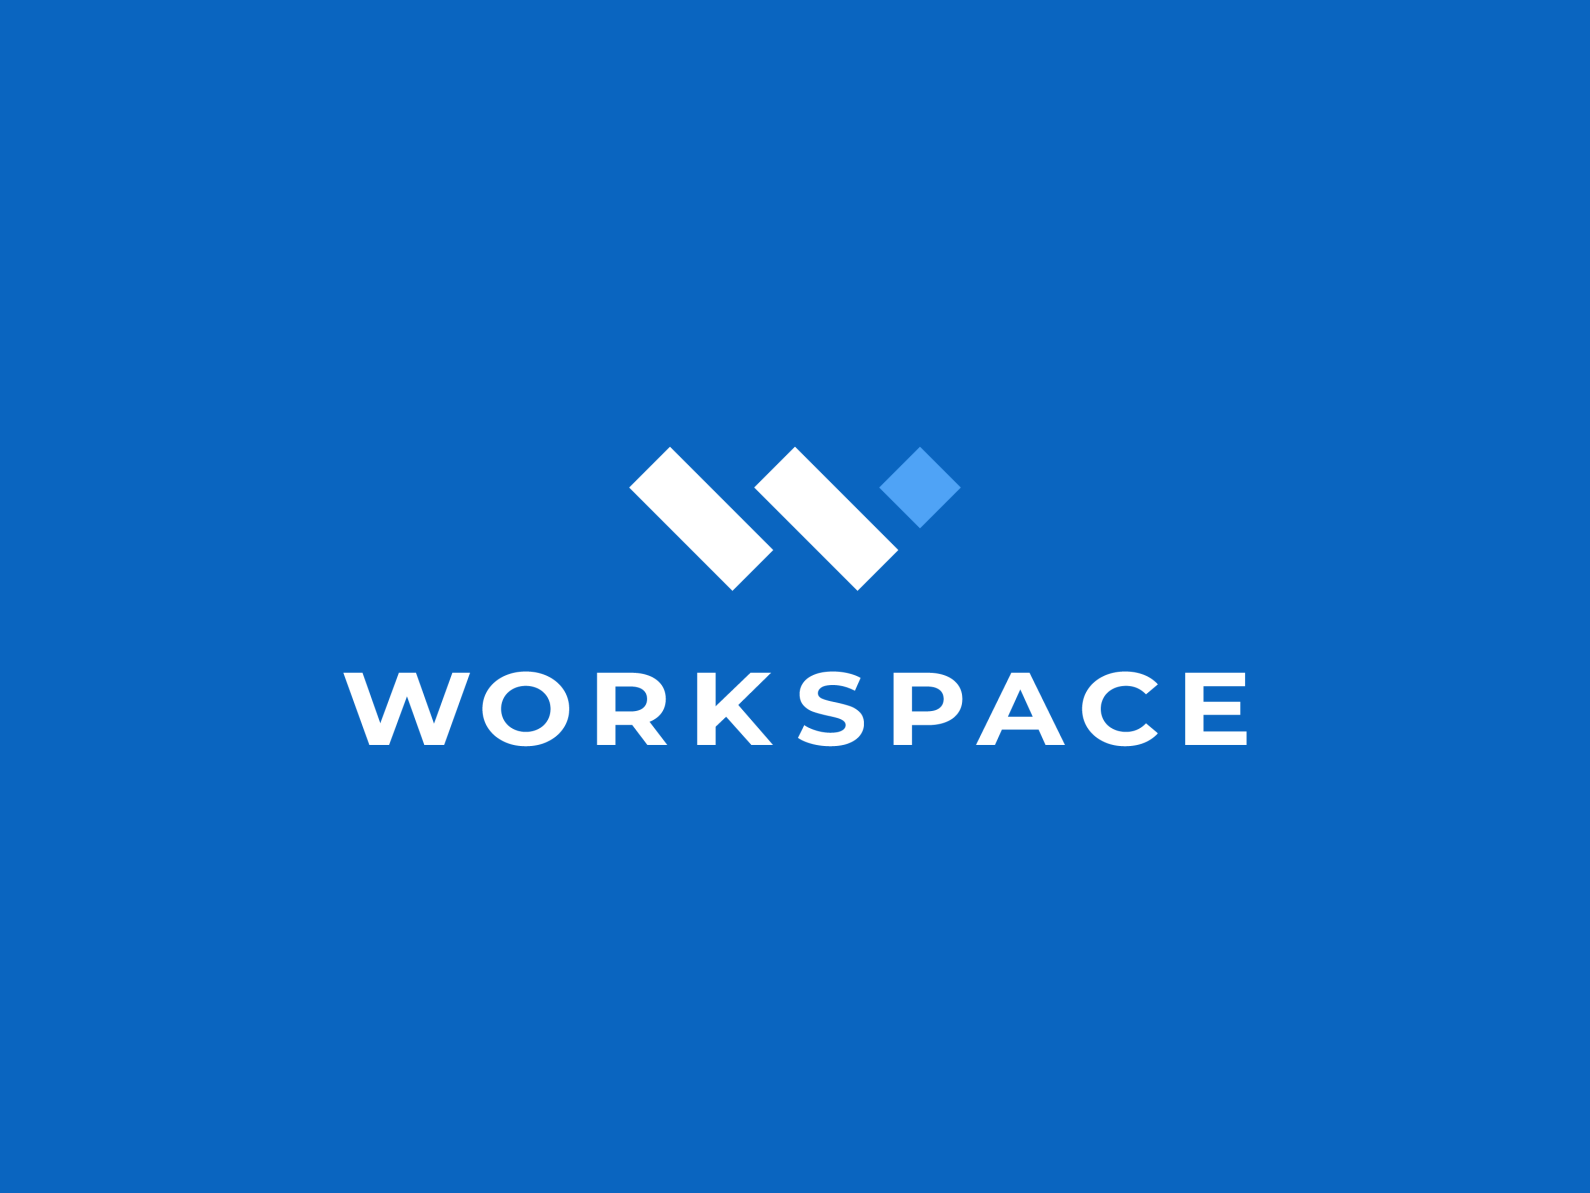 WorkSpace by Trevor Kinkade on Dribbble